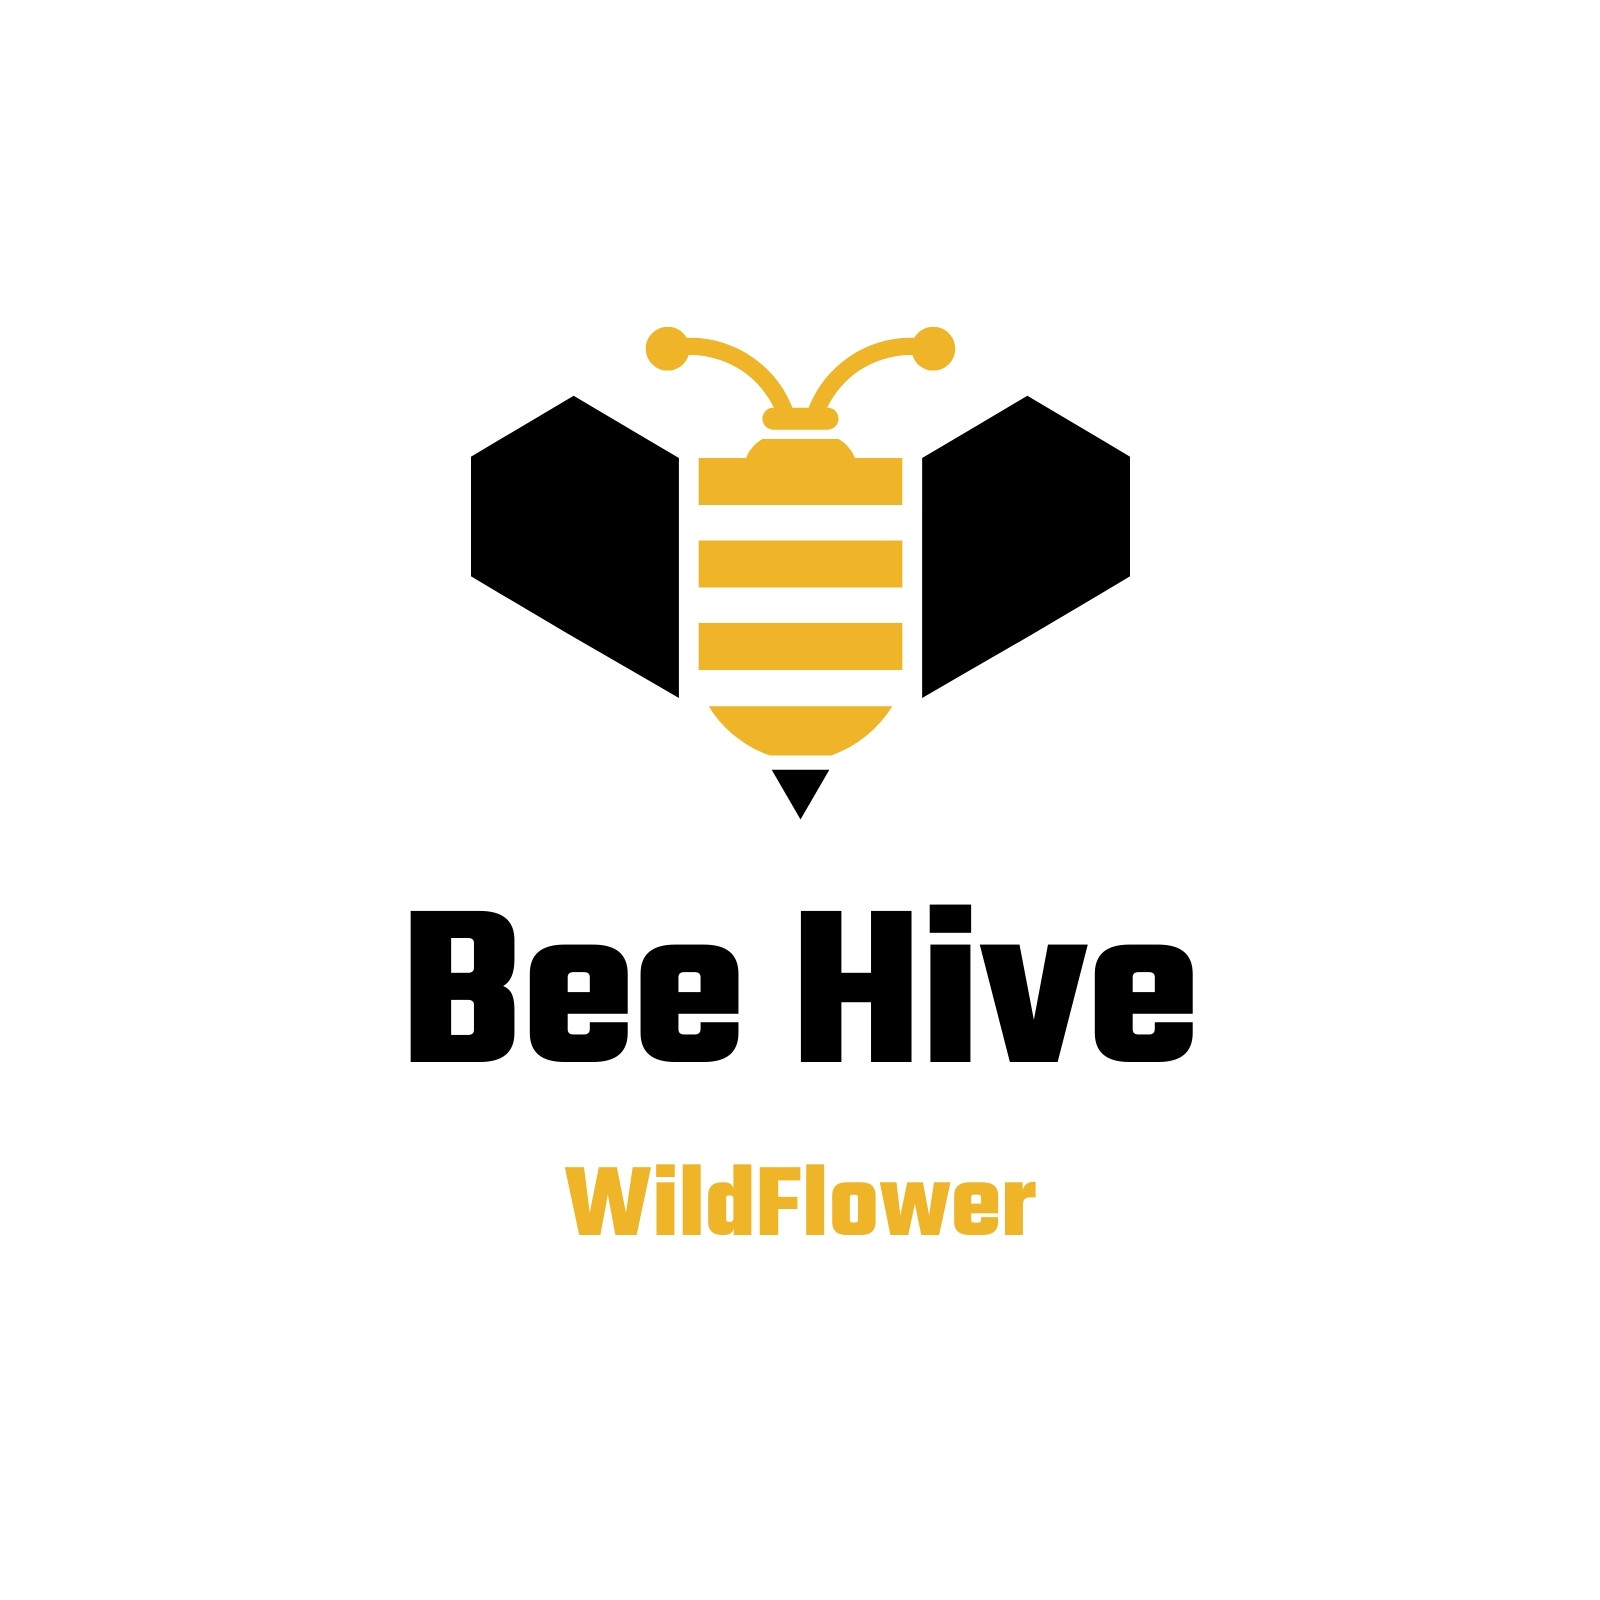 hive logo inspiration